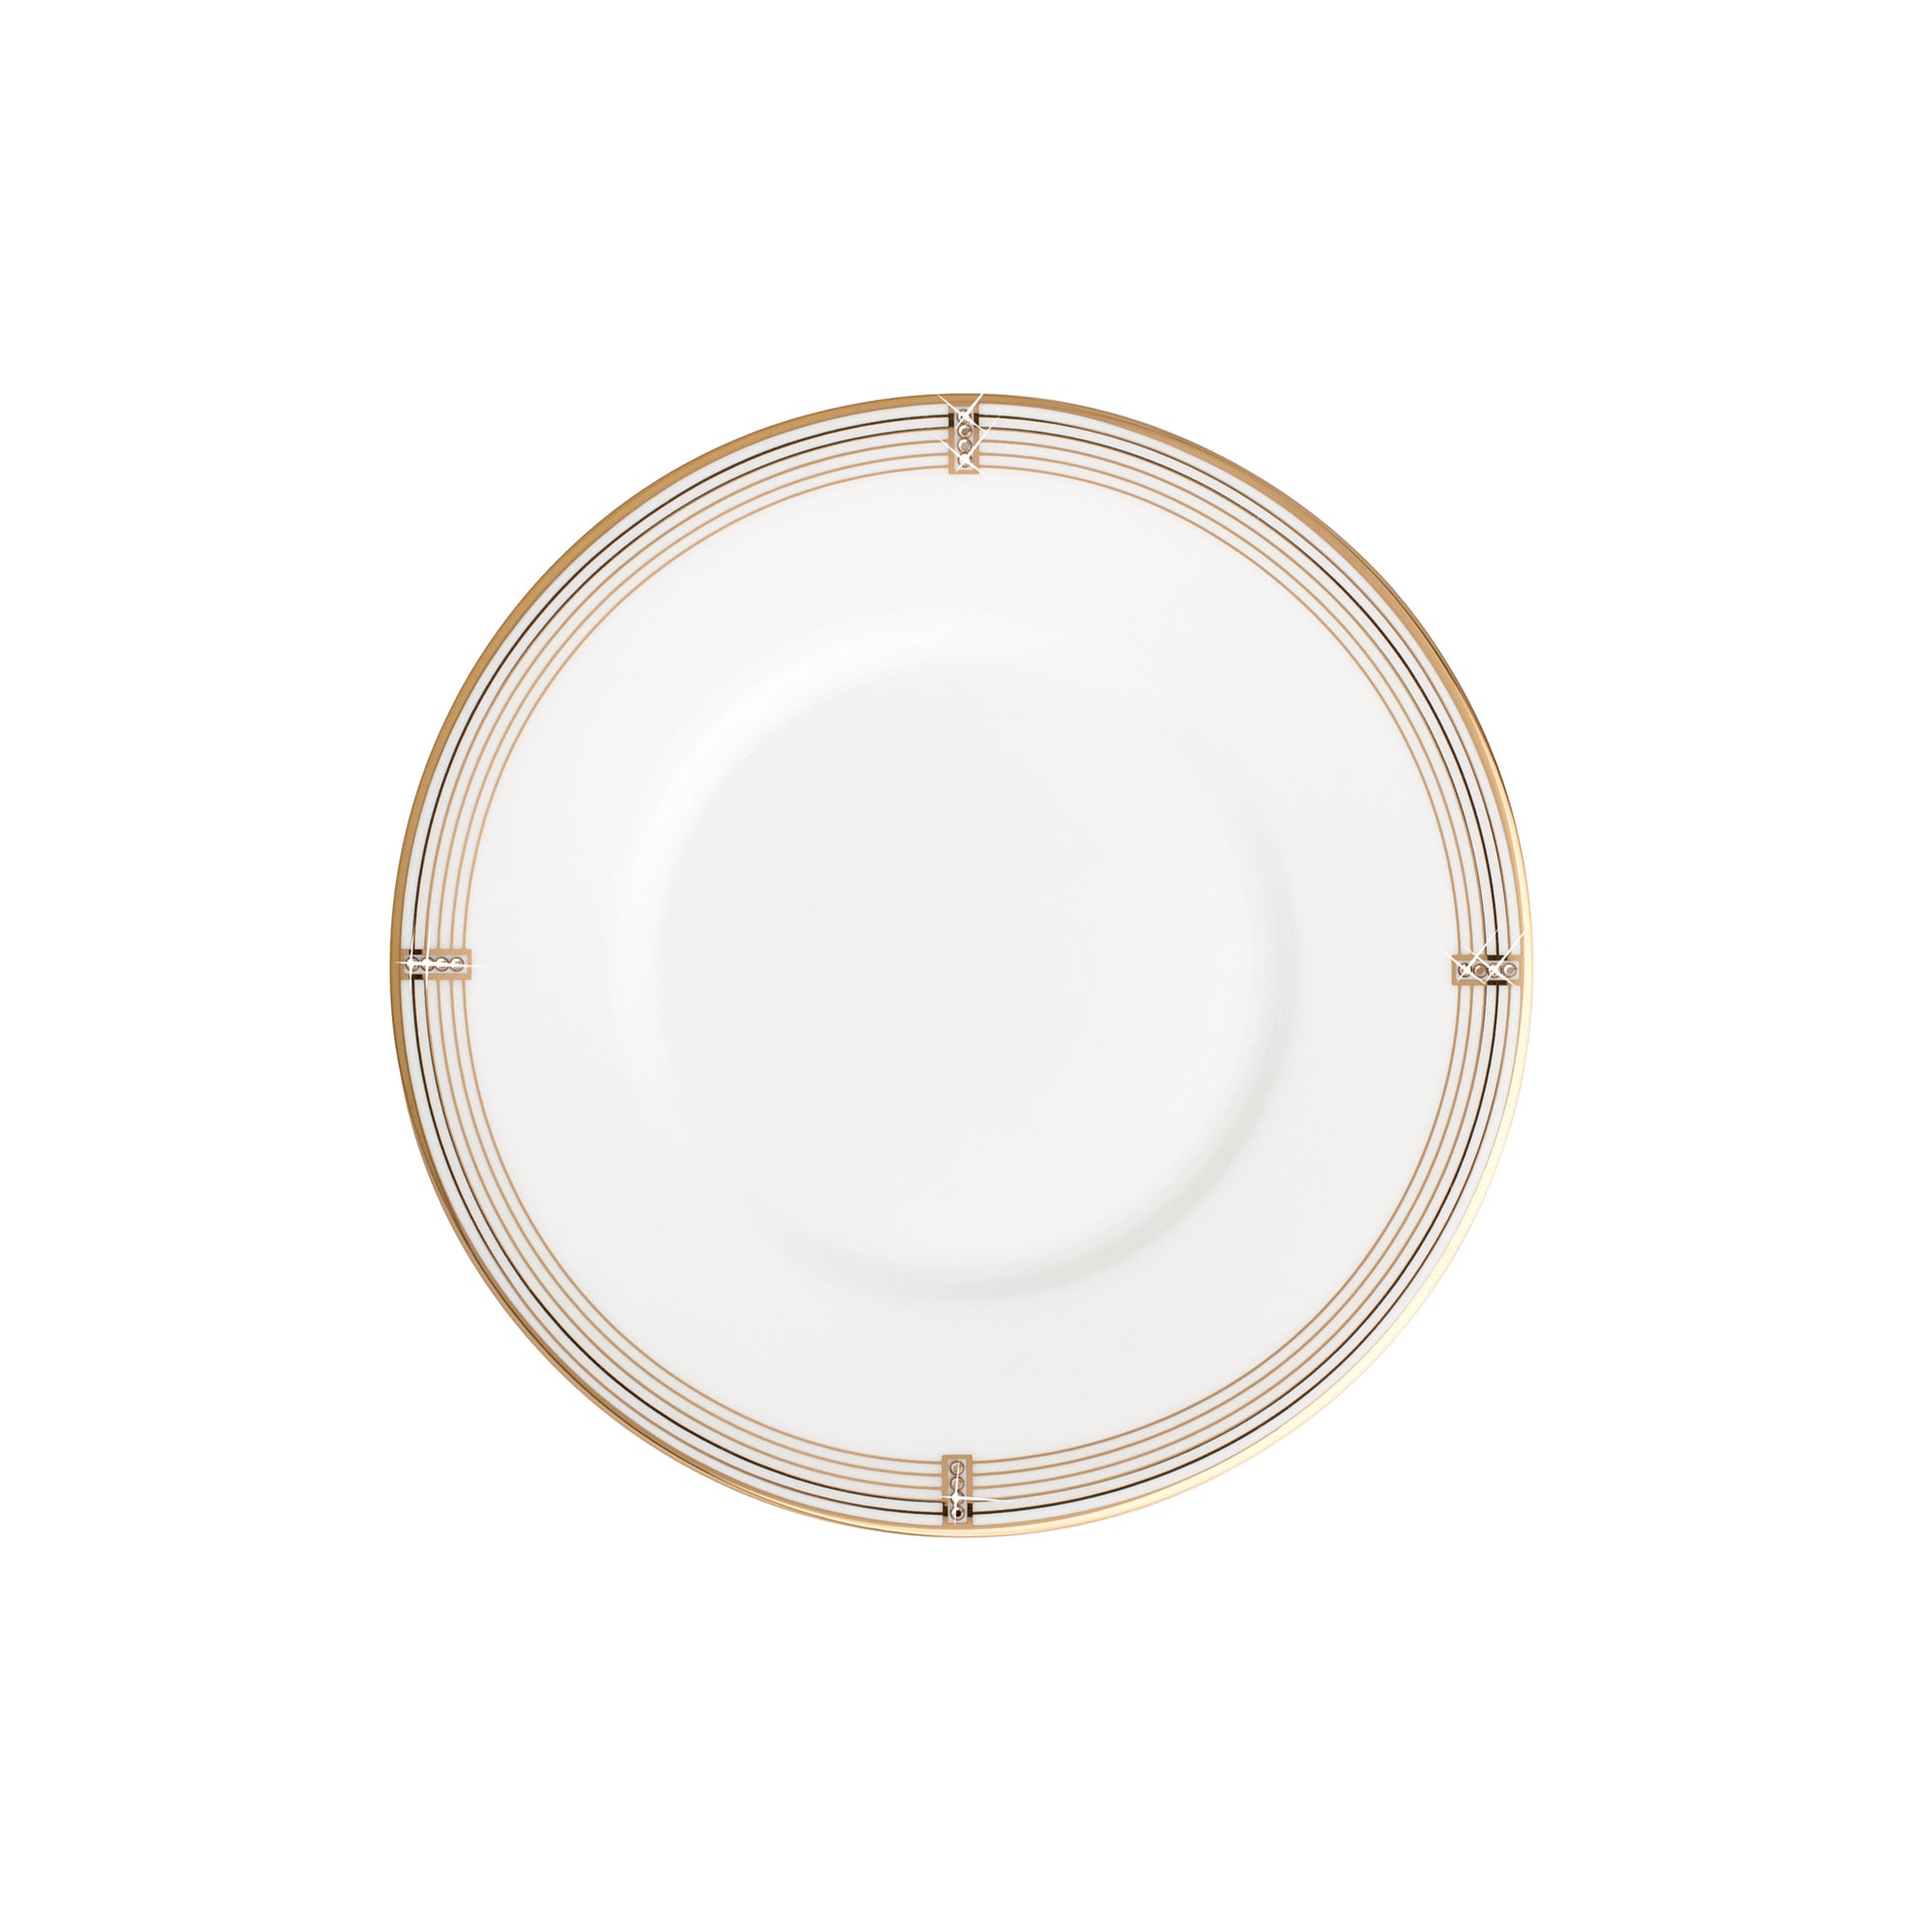 Prouna Regency Gold Bread & Butter Plate White Background Photo